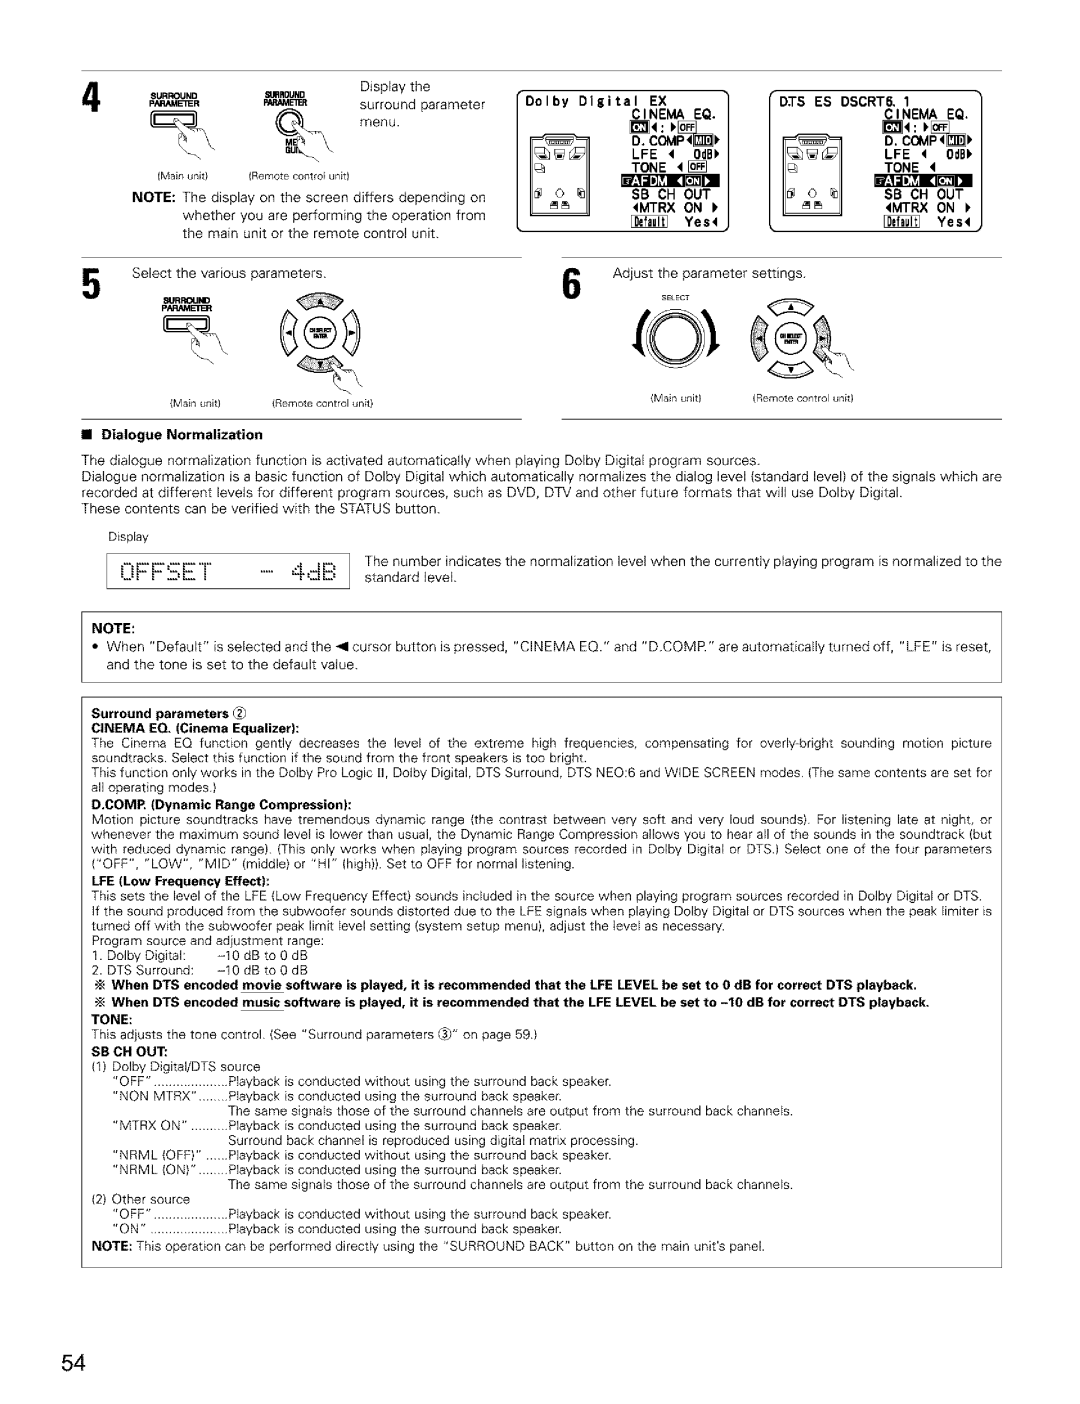 Denon AVR-2803/983 manual SBD. COMPCH OUT4 Jk, Dialogue Normalization 